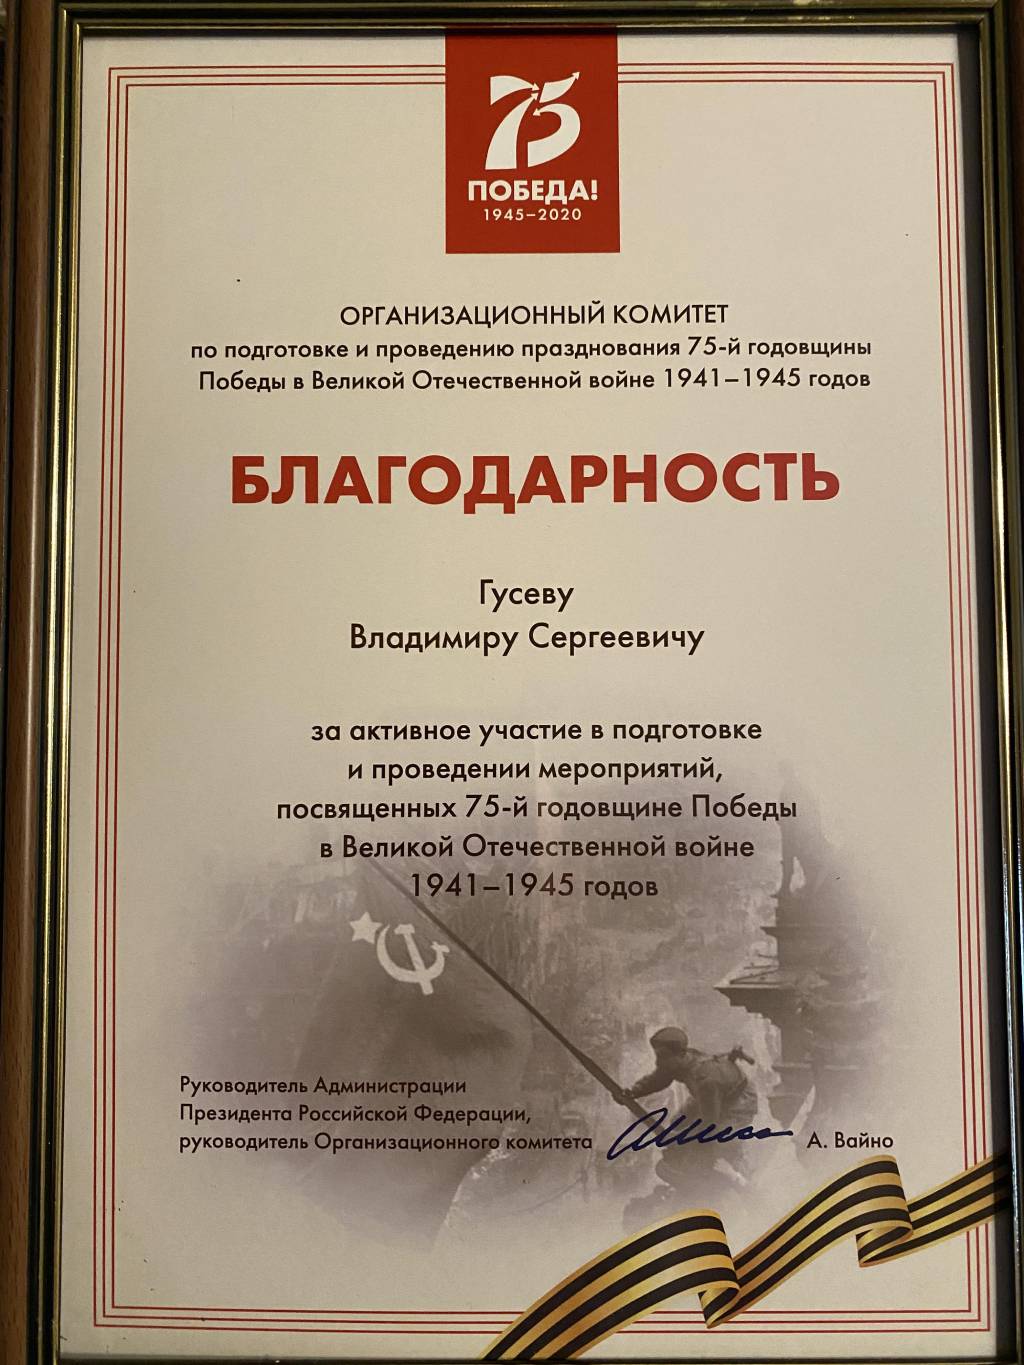 Благодарность В.С. Гусеву от Администрации Президента РФ